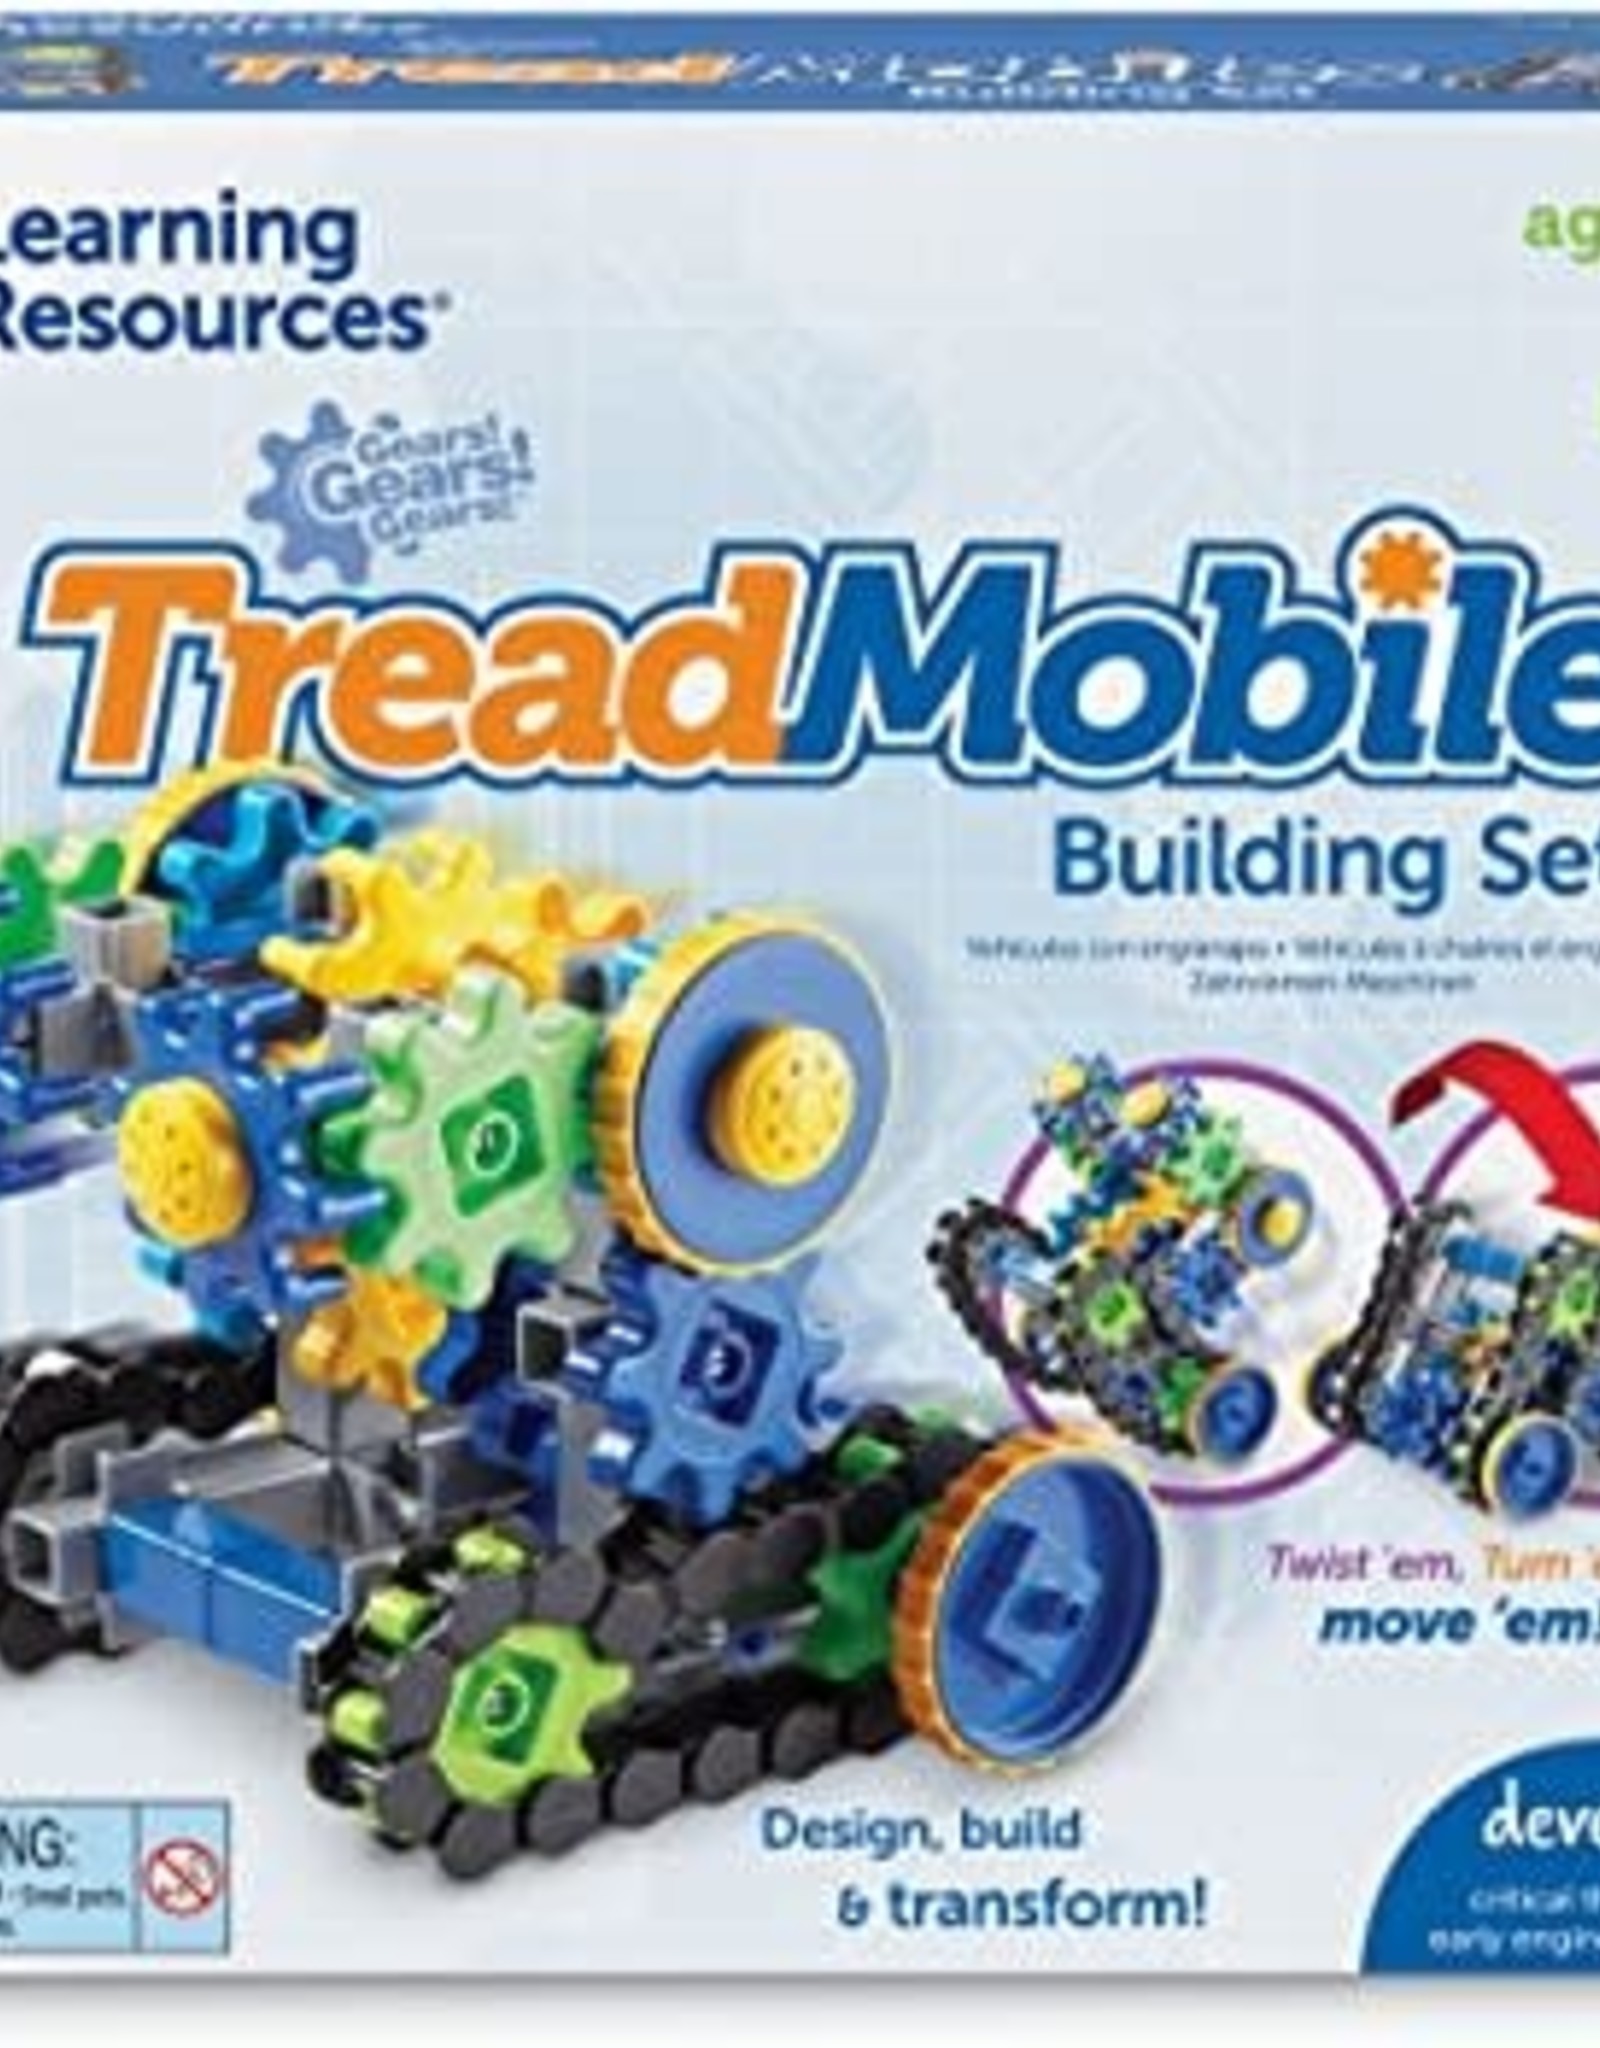 Learning Resources Gears! Gears! Gears! Treadmobiles